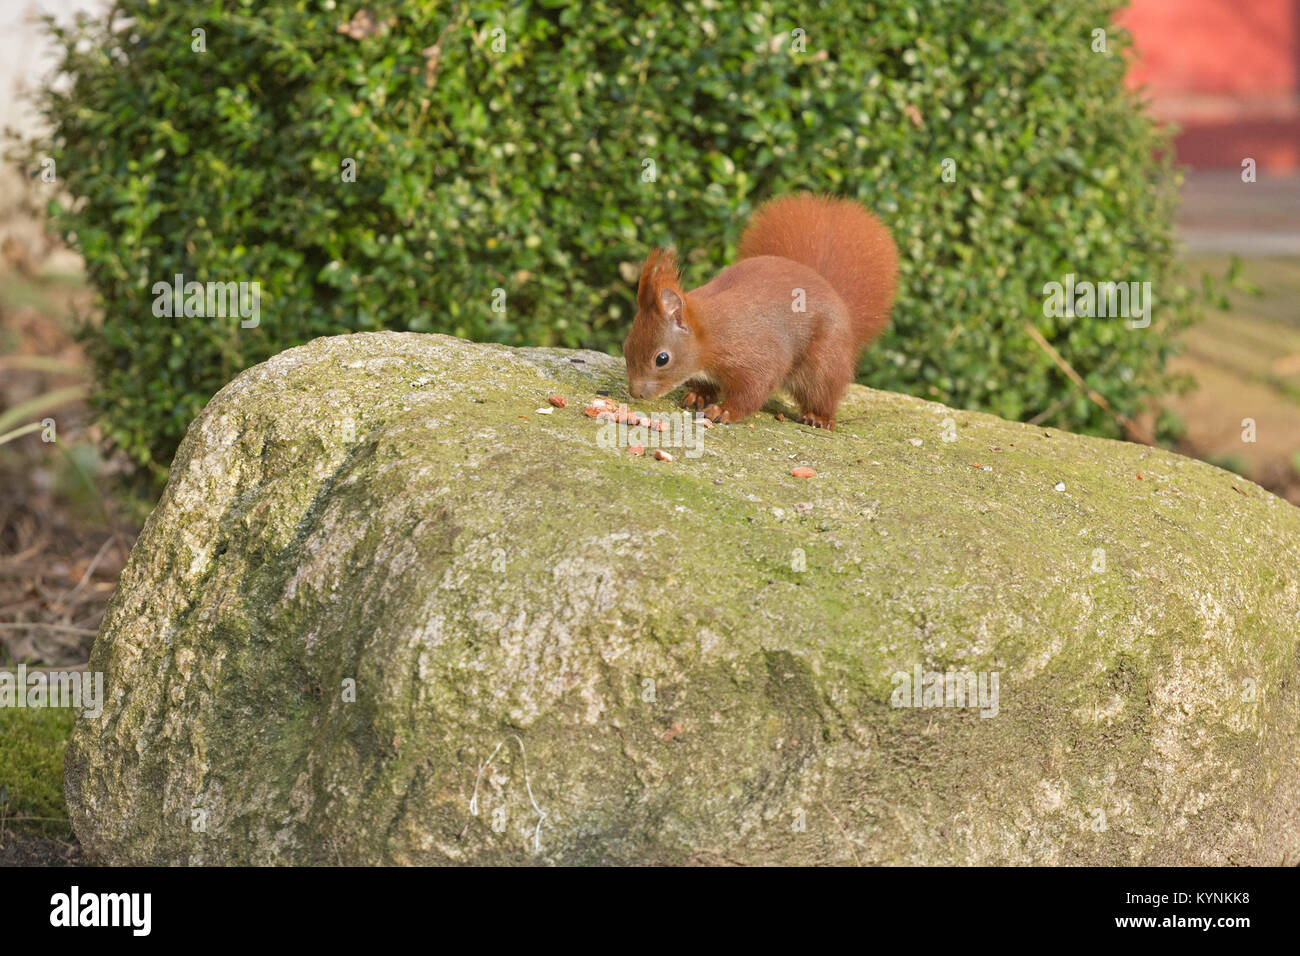 squirrel on a stone, Wilhelmsburg, Hamburg, Germany Stock Photo